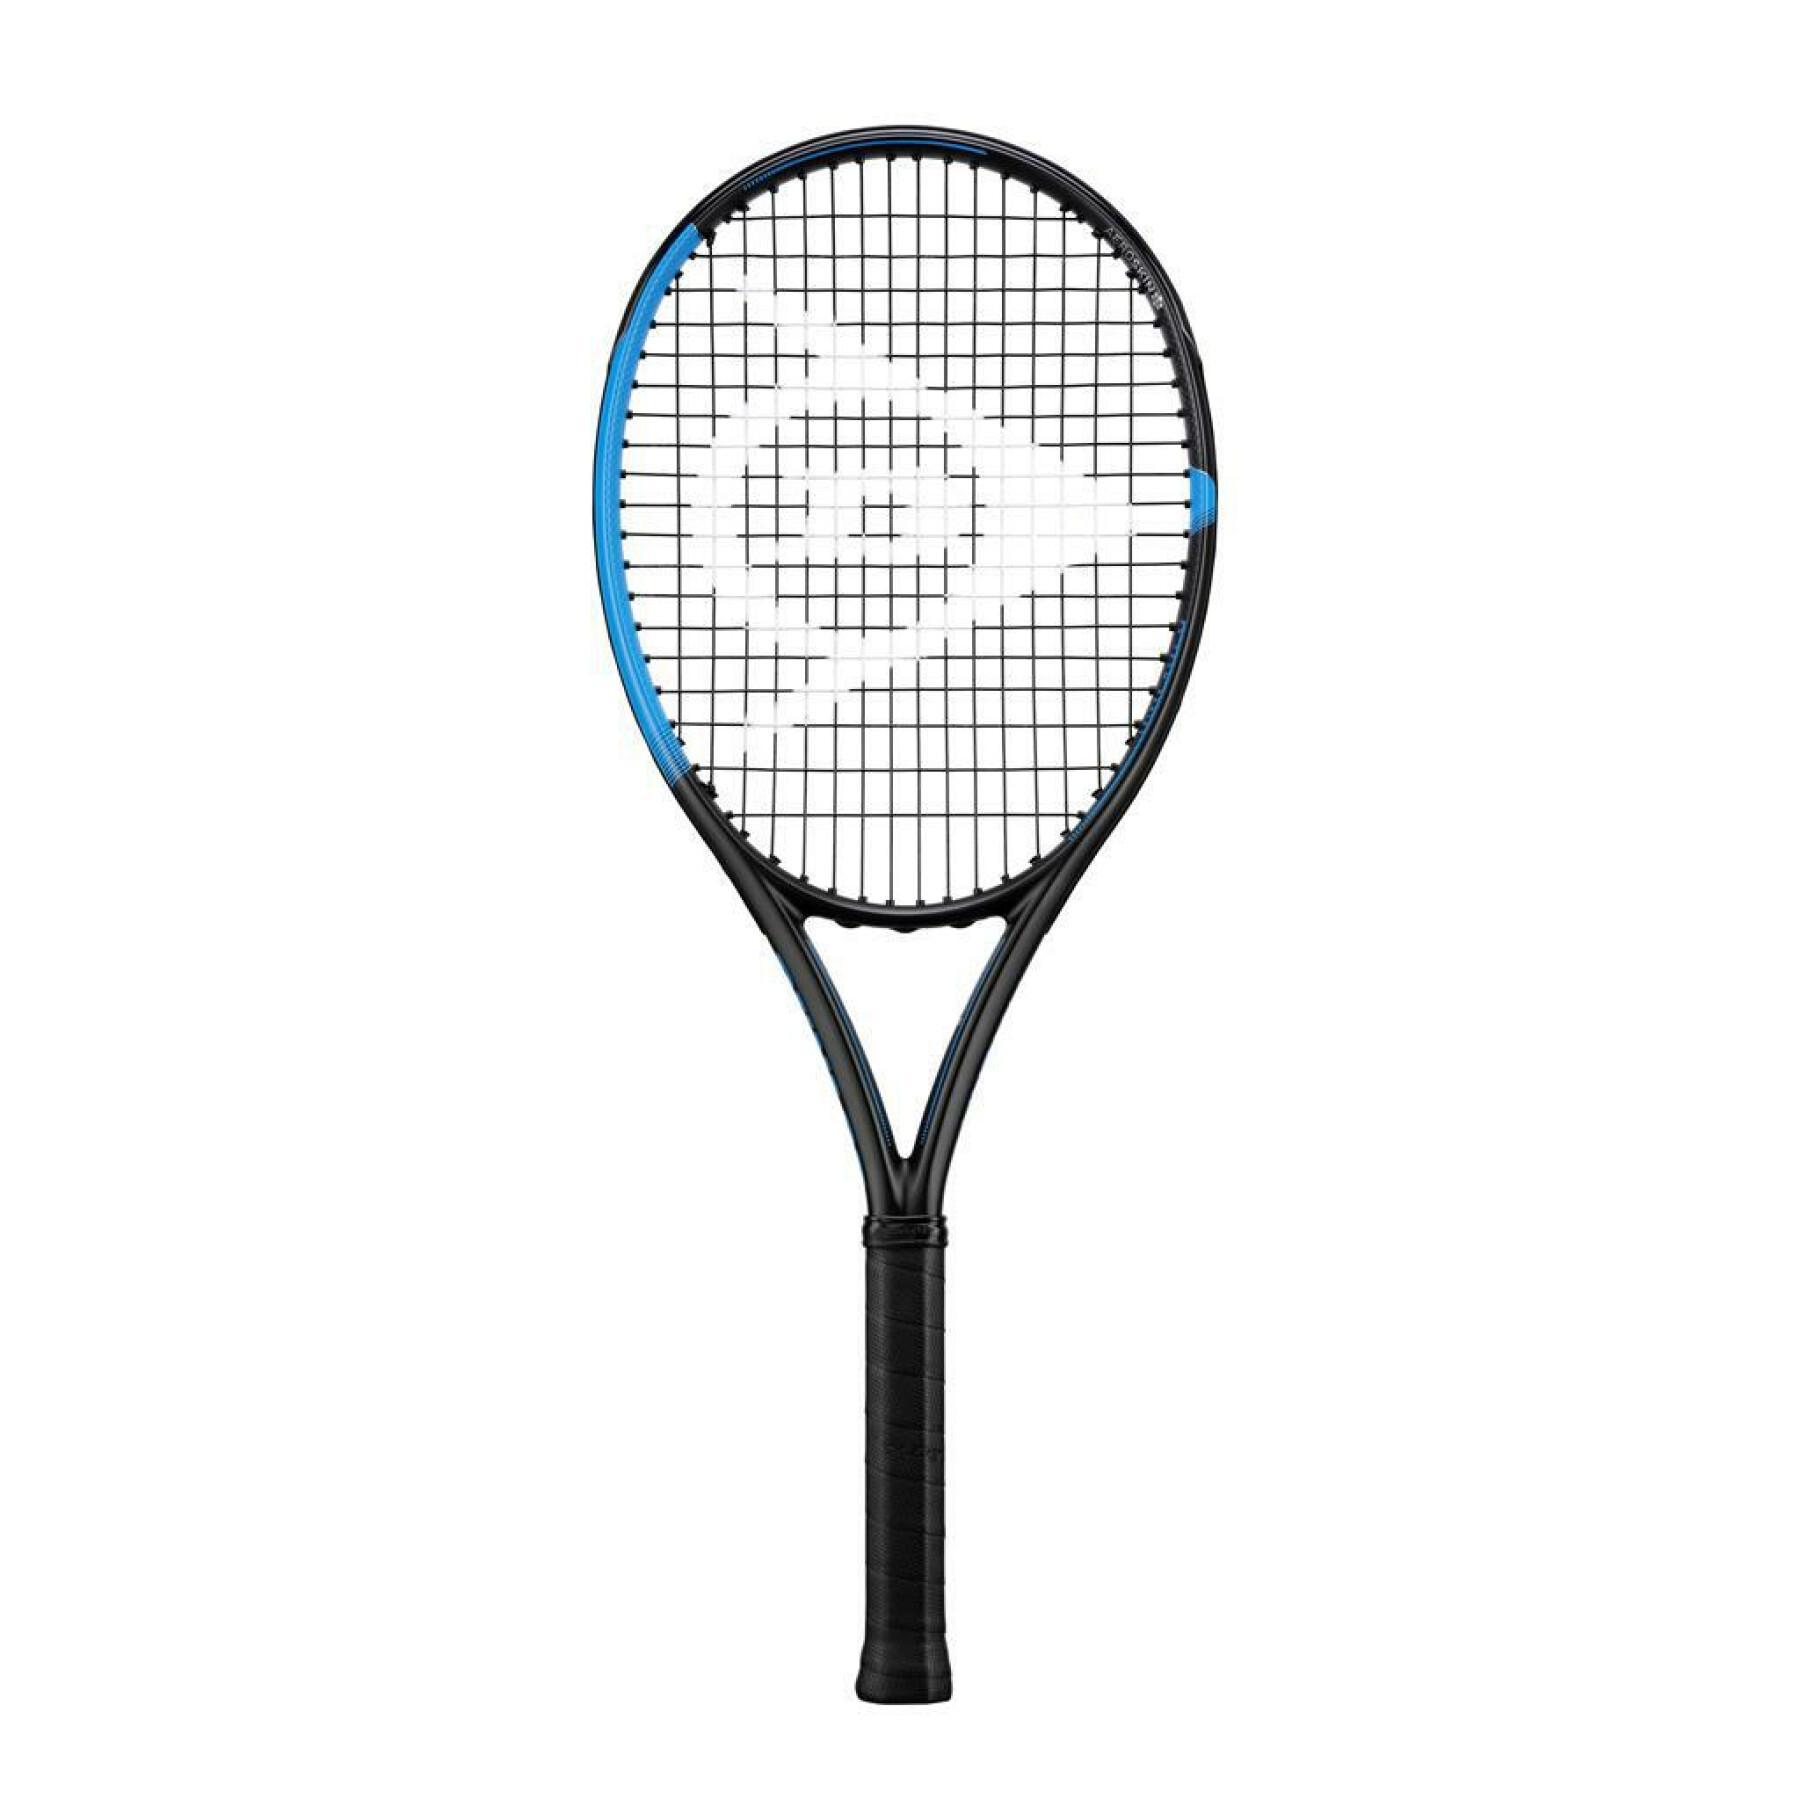 Children's racket Dunlop fx team 285 g1 nh